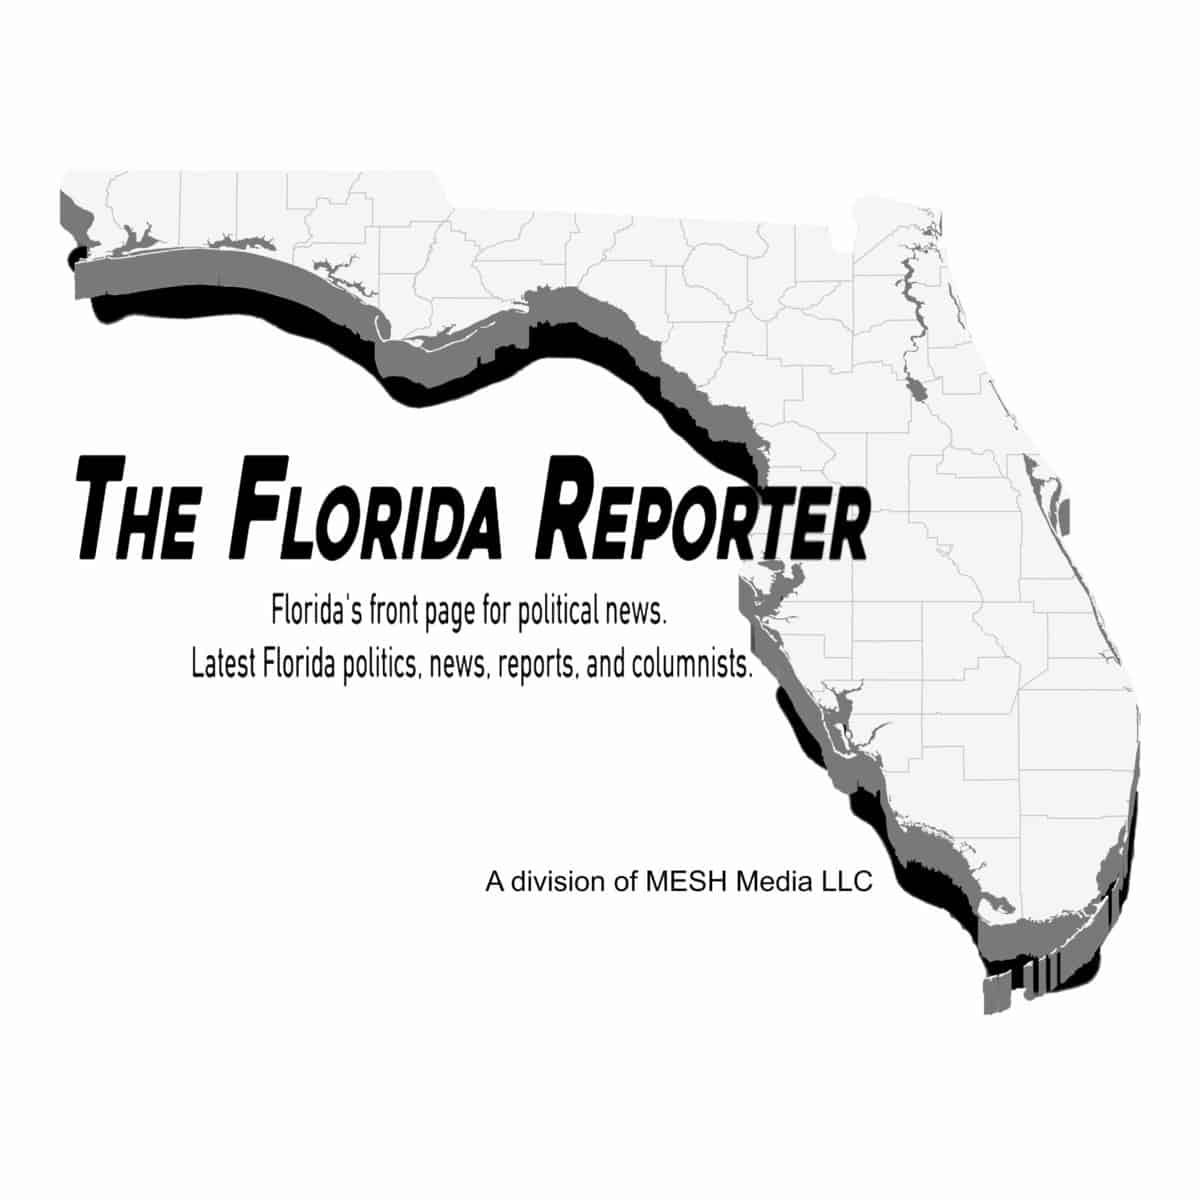 The Florida Reporter